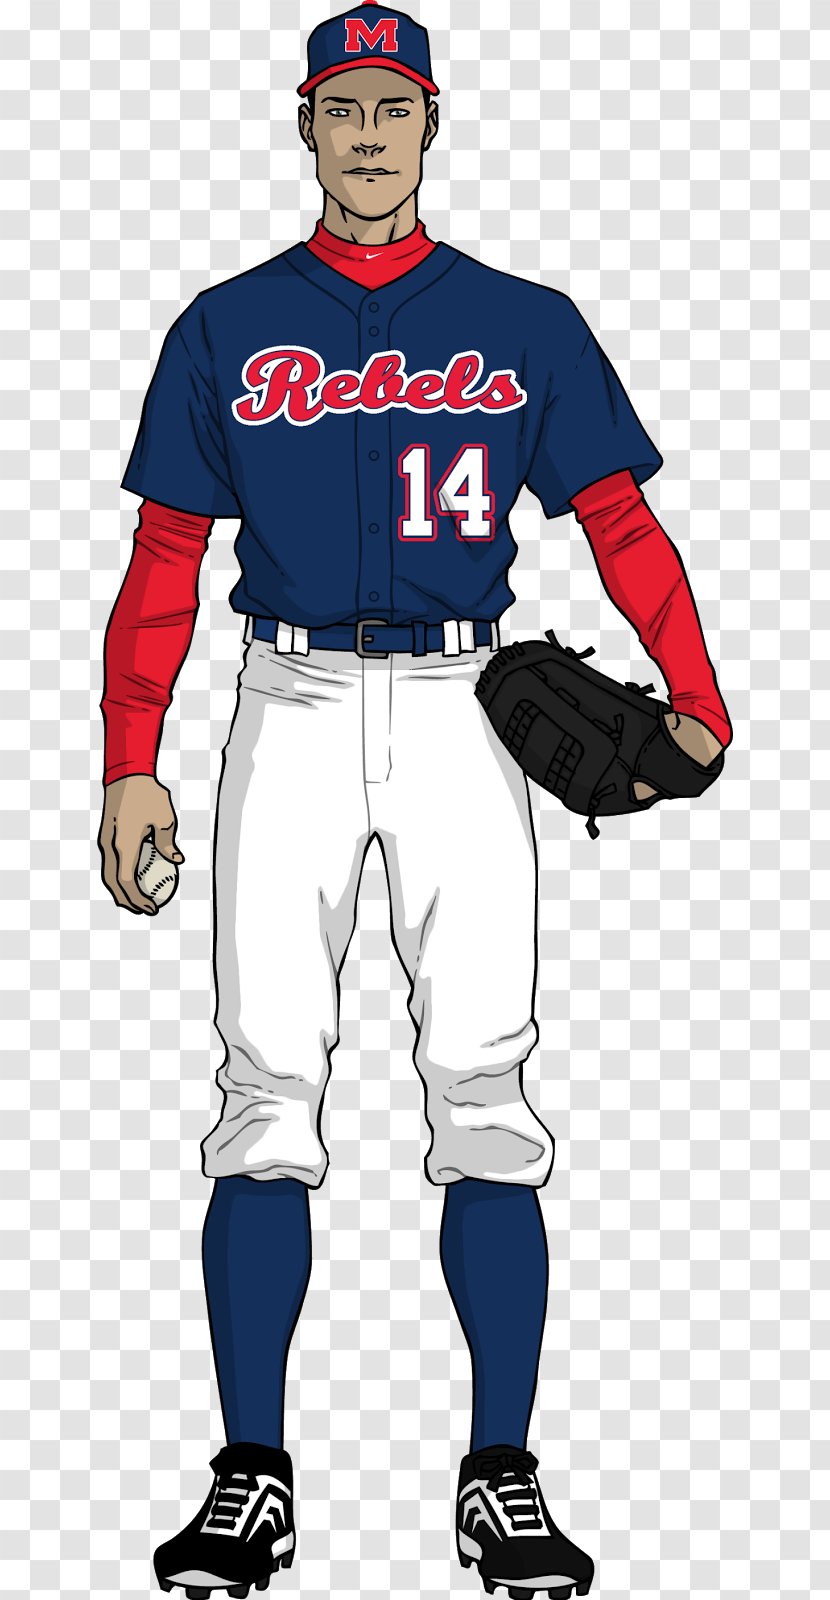 John Cohen Jersey Baseball Positions Mississippi State University Ole Miss Rebels - Sports Uniform Transparent PNG